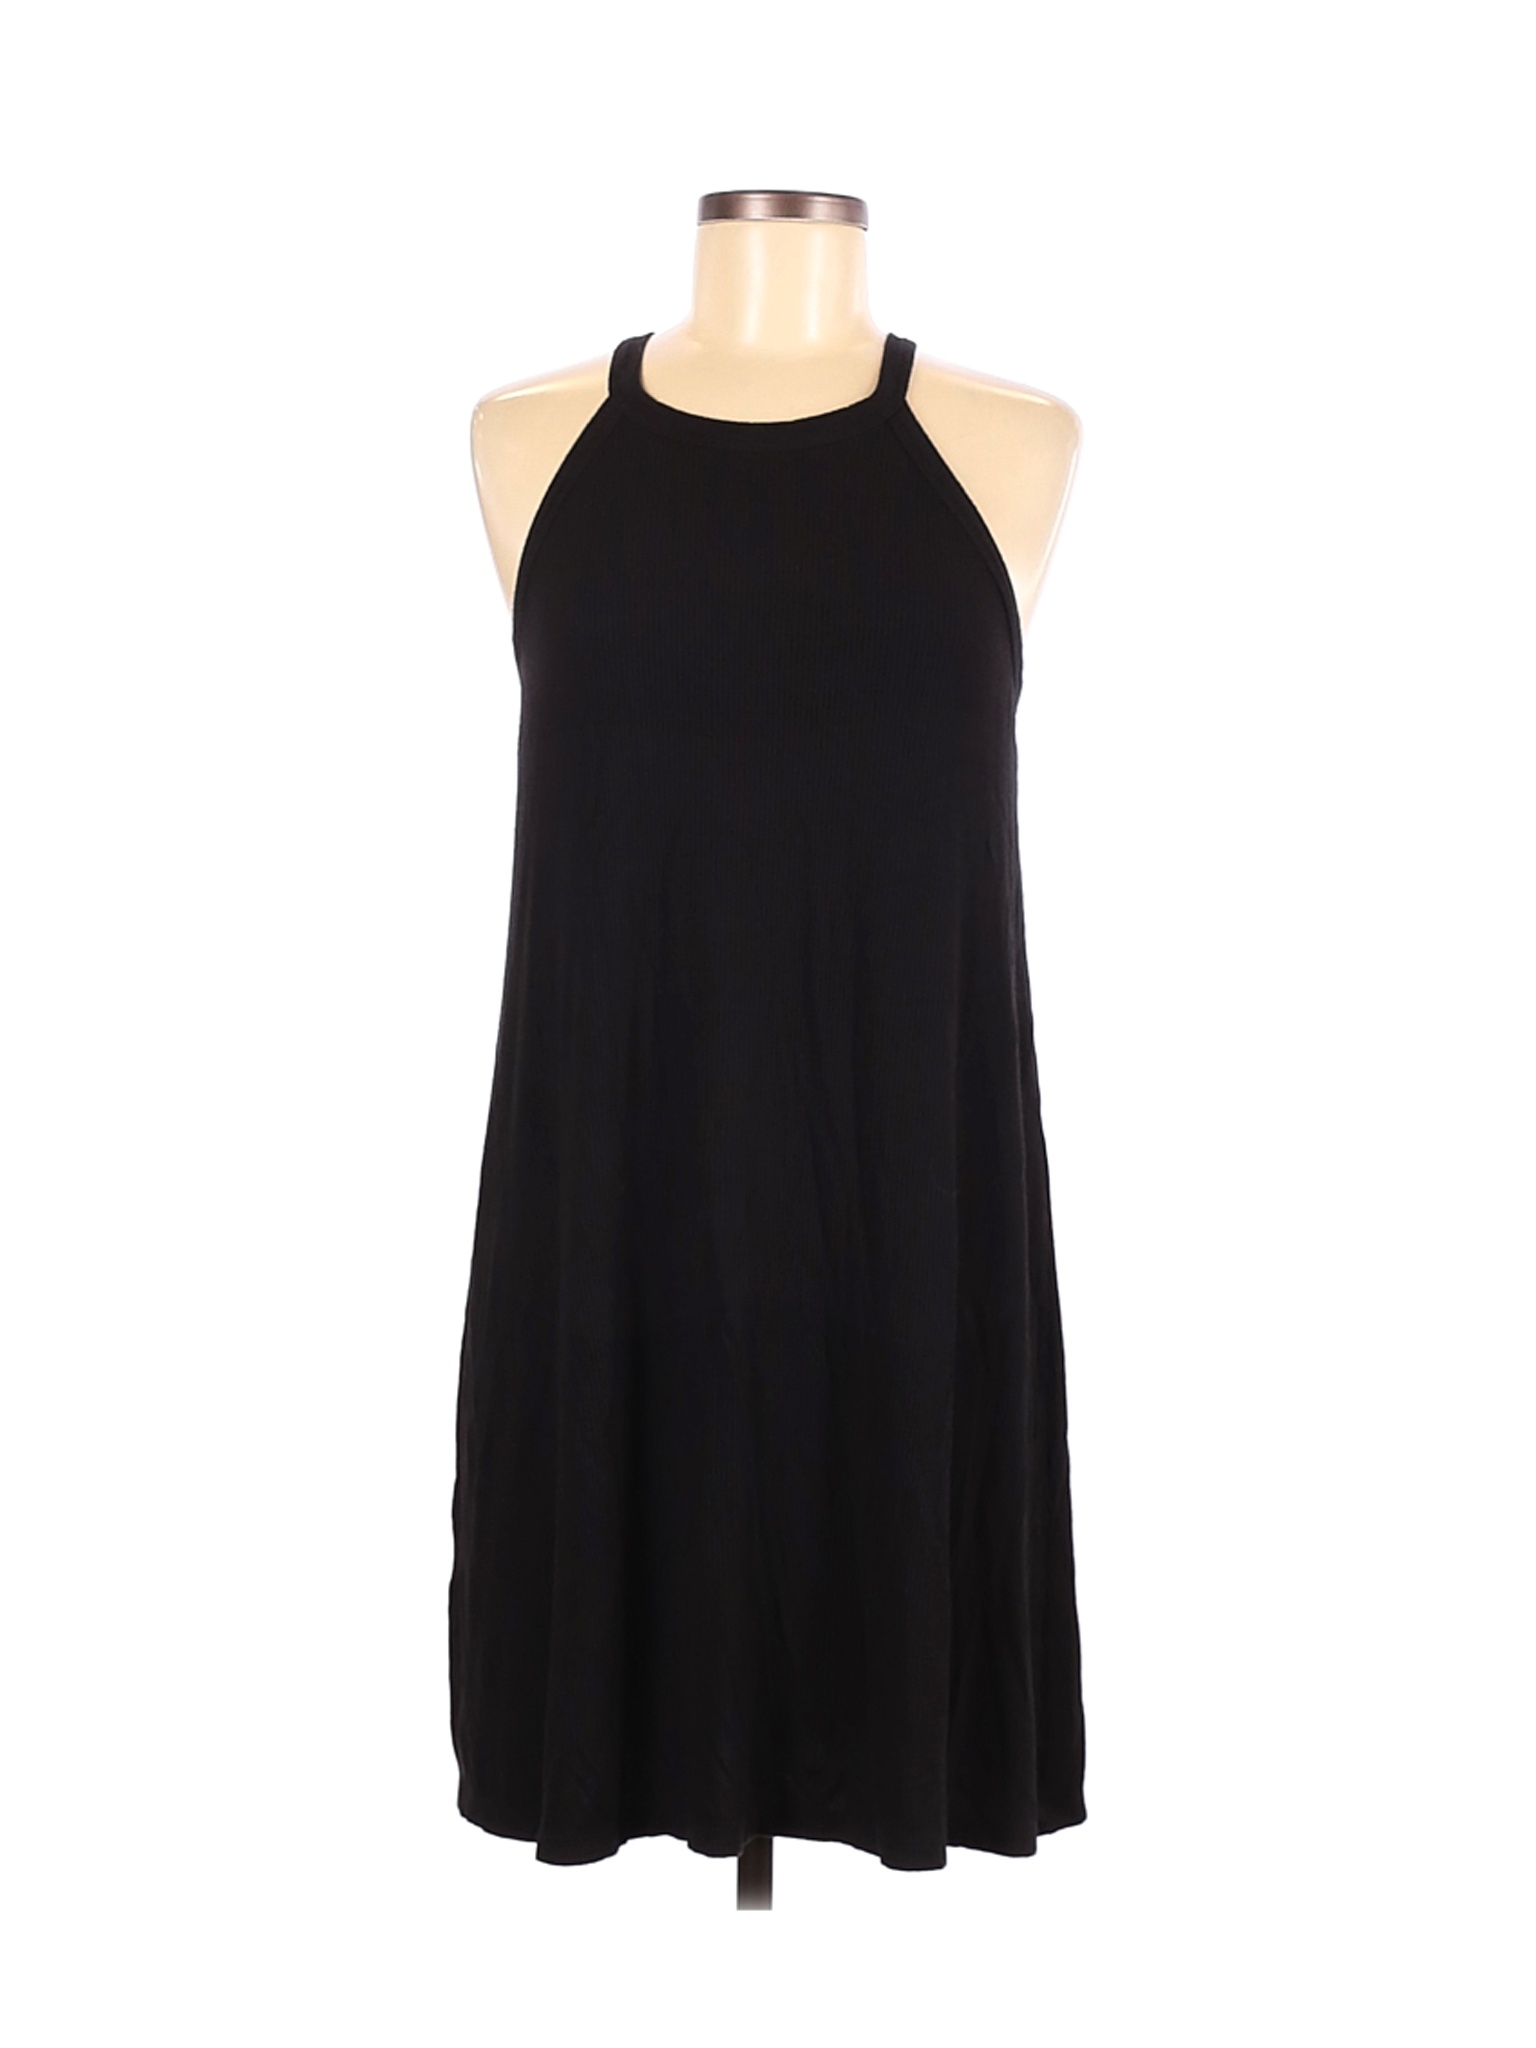 Madewell Women Black Casual Dress M | eBay